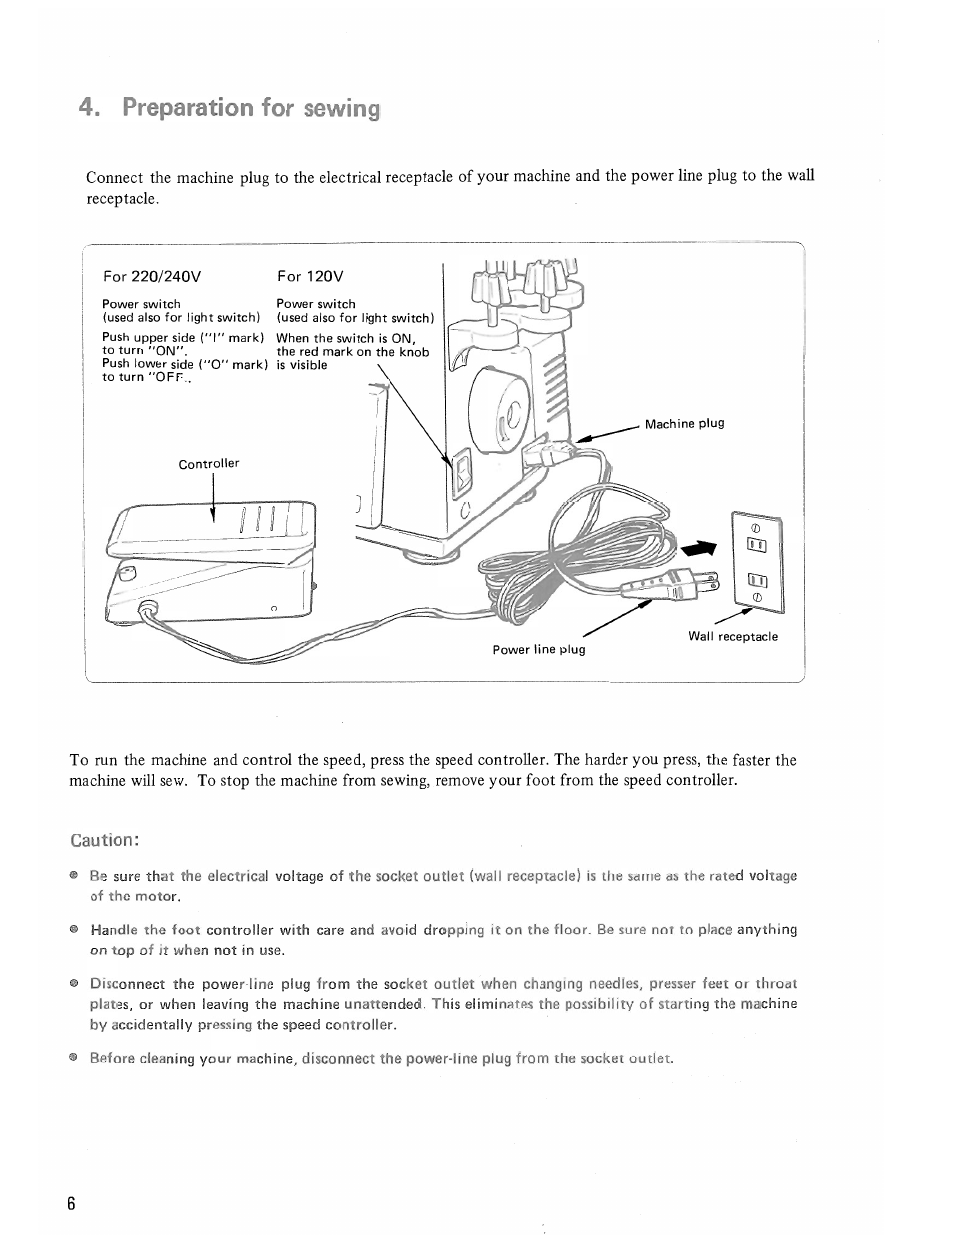 Preparation for sewing | SINGER 14U285B User Manual | Page 8 / 48